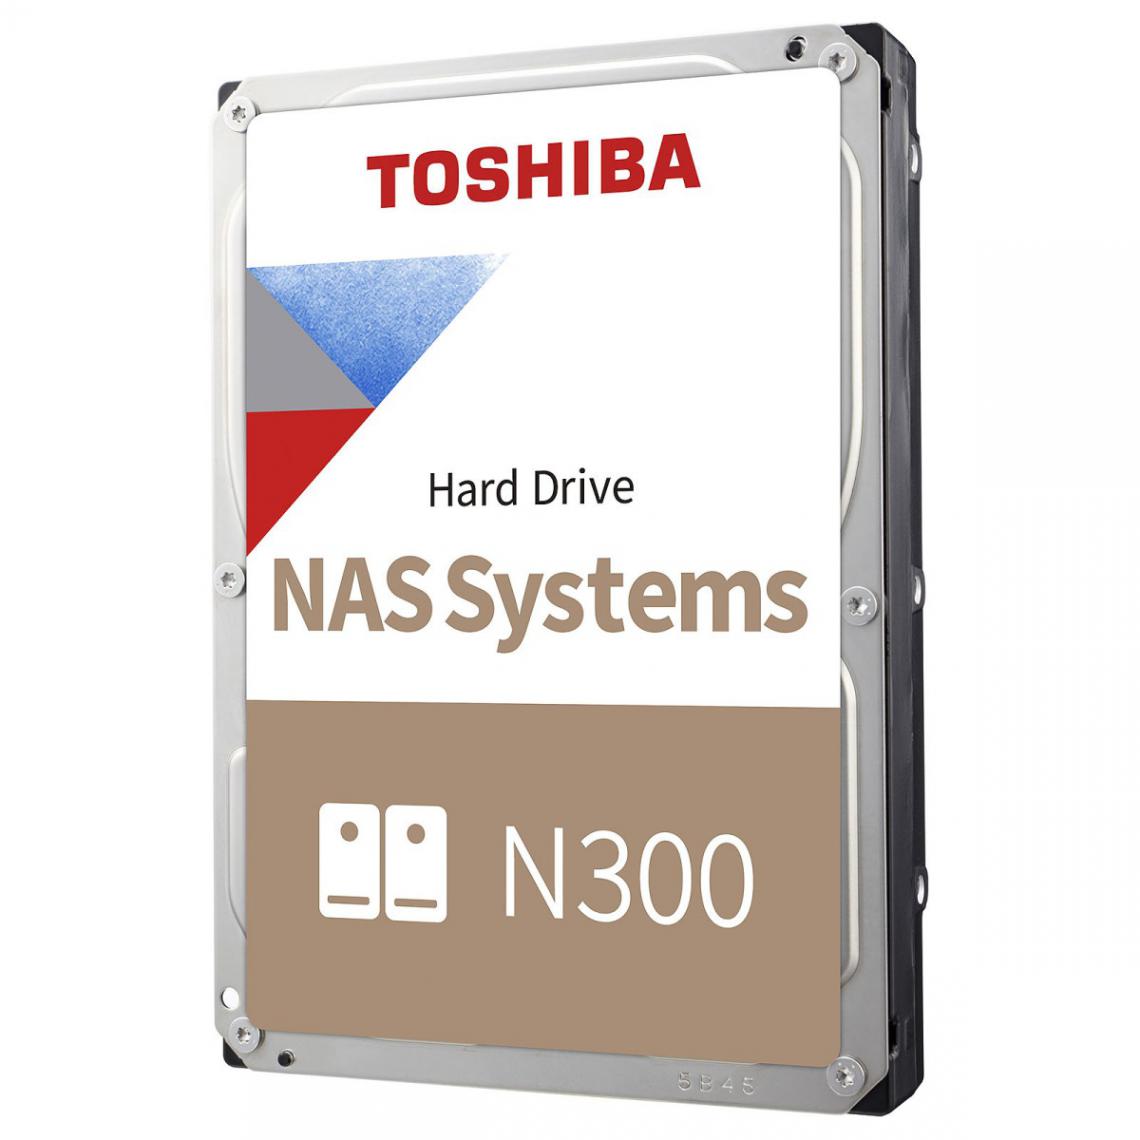 Toshiba - N300 High-Reliability Hard Drive 8 To - 7200 tpm - 256 Mo - NAS - CMR - Disque Dur interne